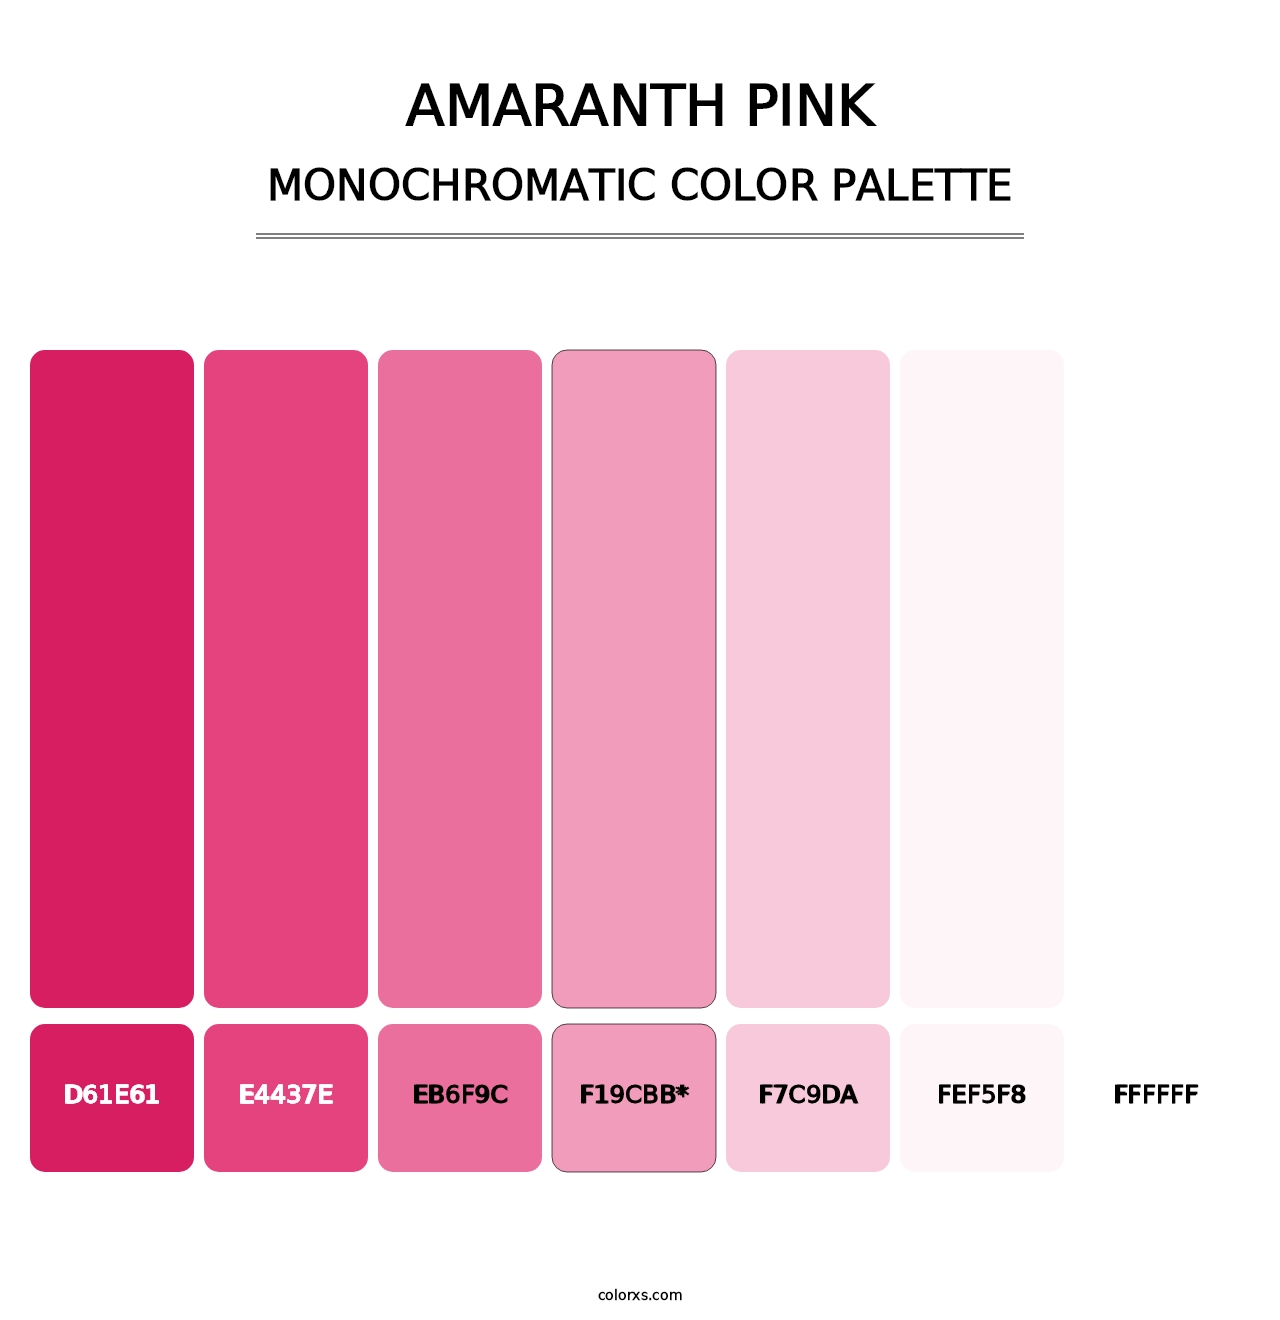 Amaranth Pink - Monochromatic Color Palette